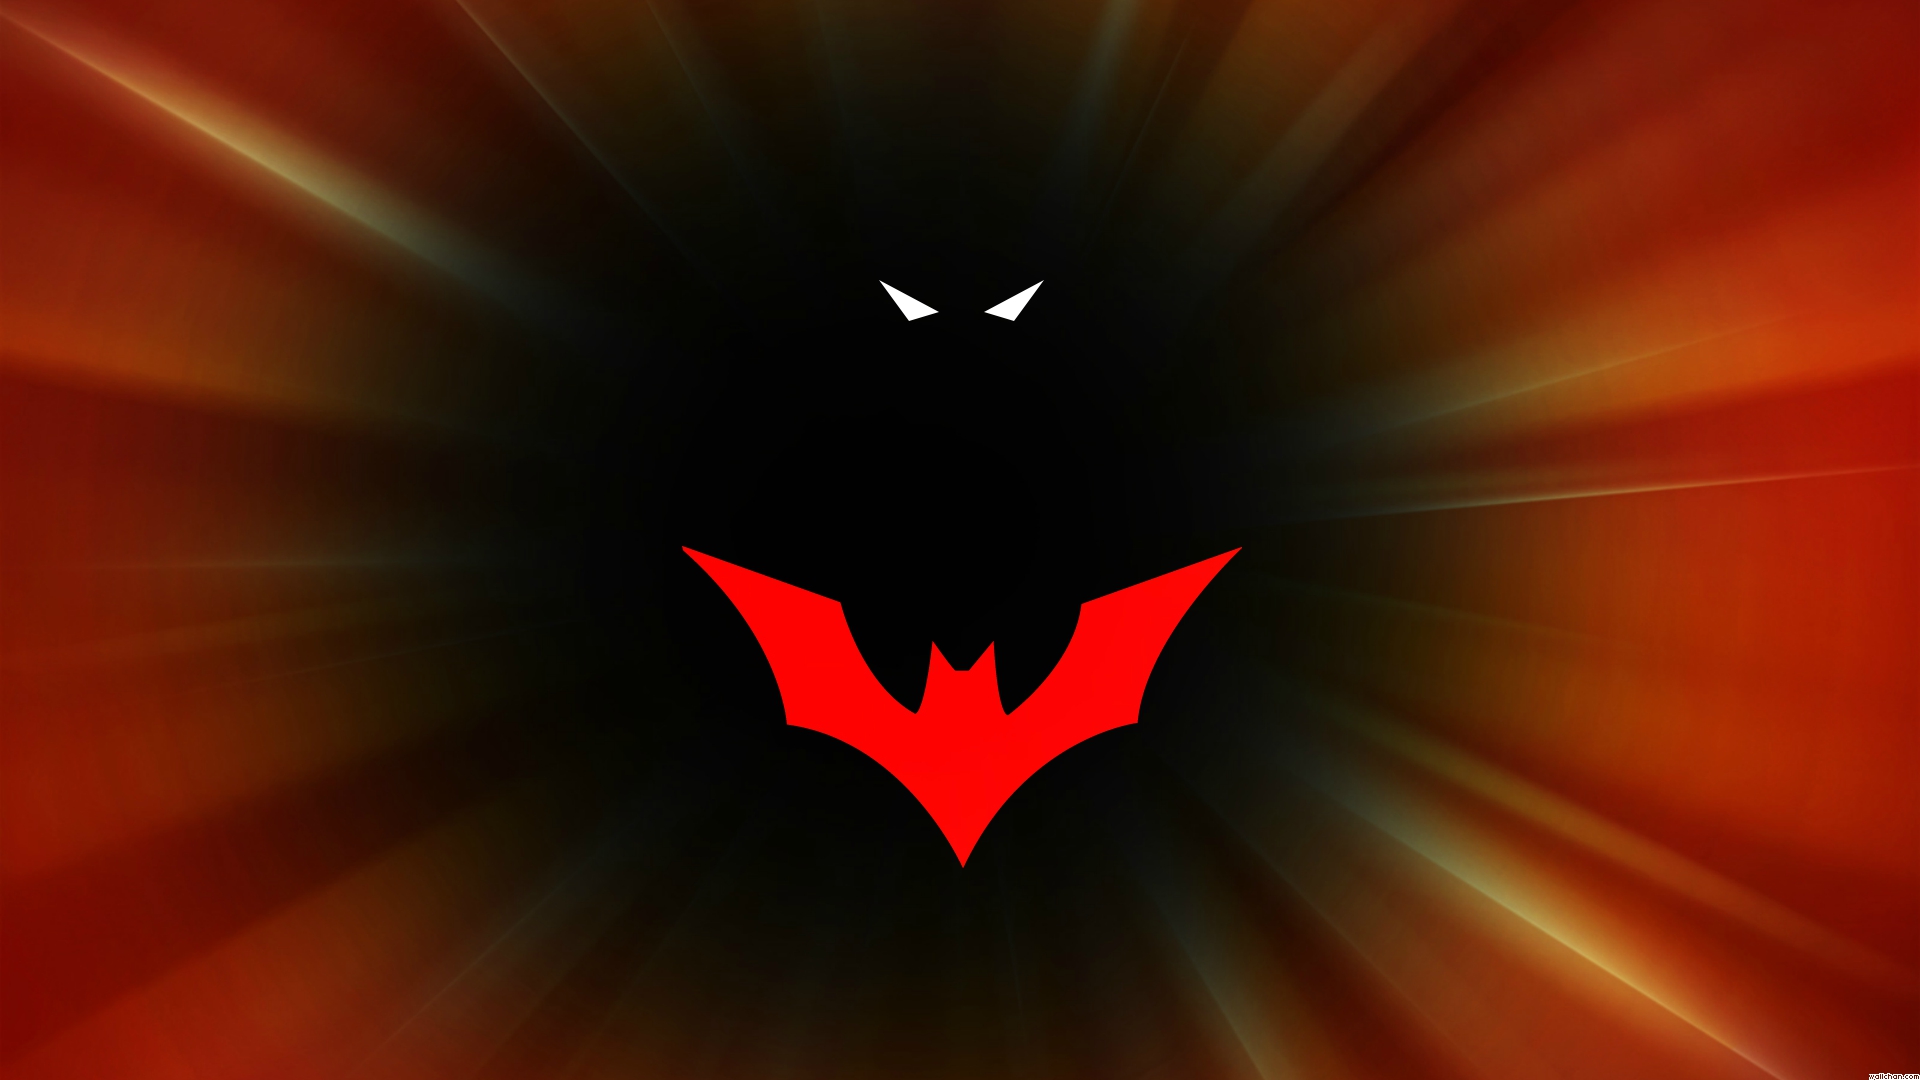 Скачать обои бесплатно Комиксы, Бэтмен, Бэтмен Будущего картинка на рабочий стол ПК